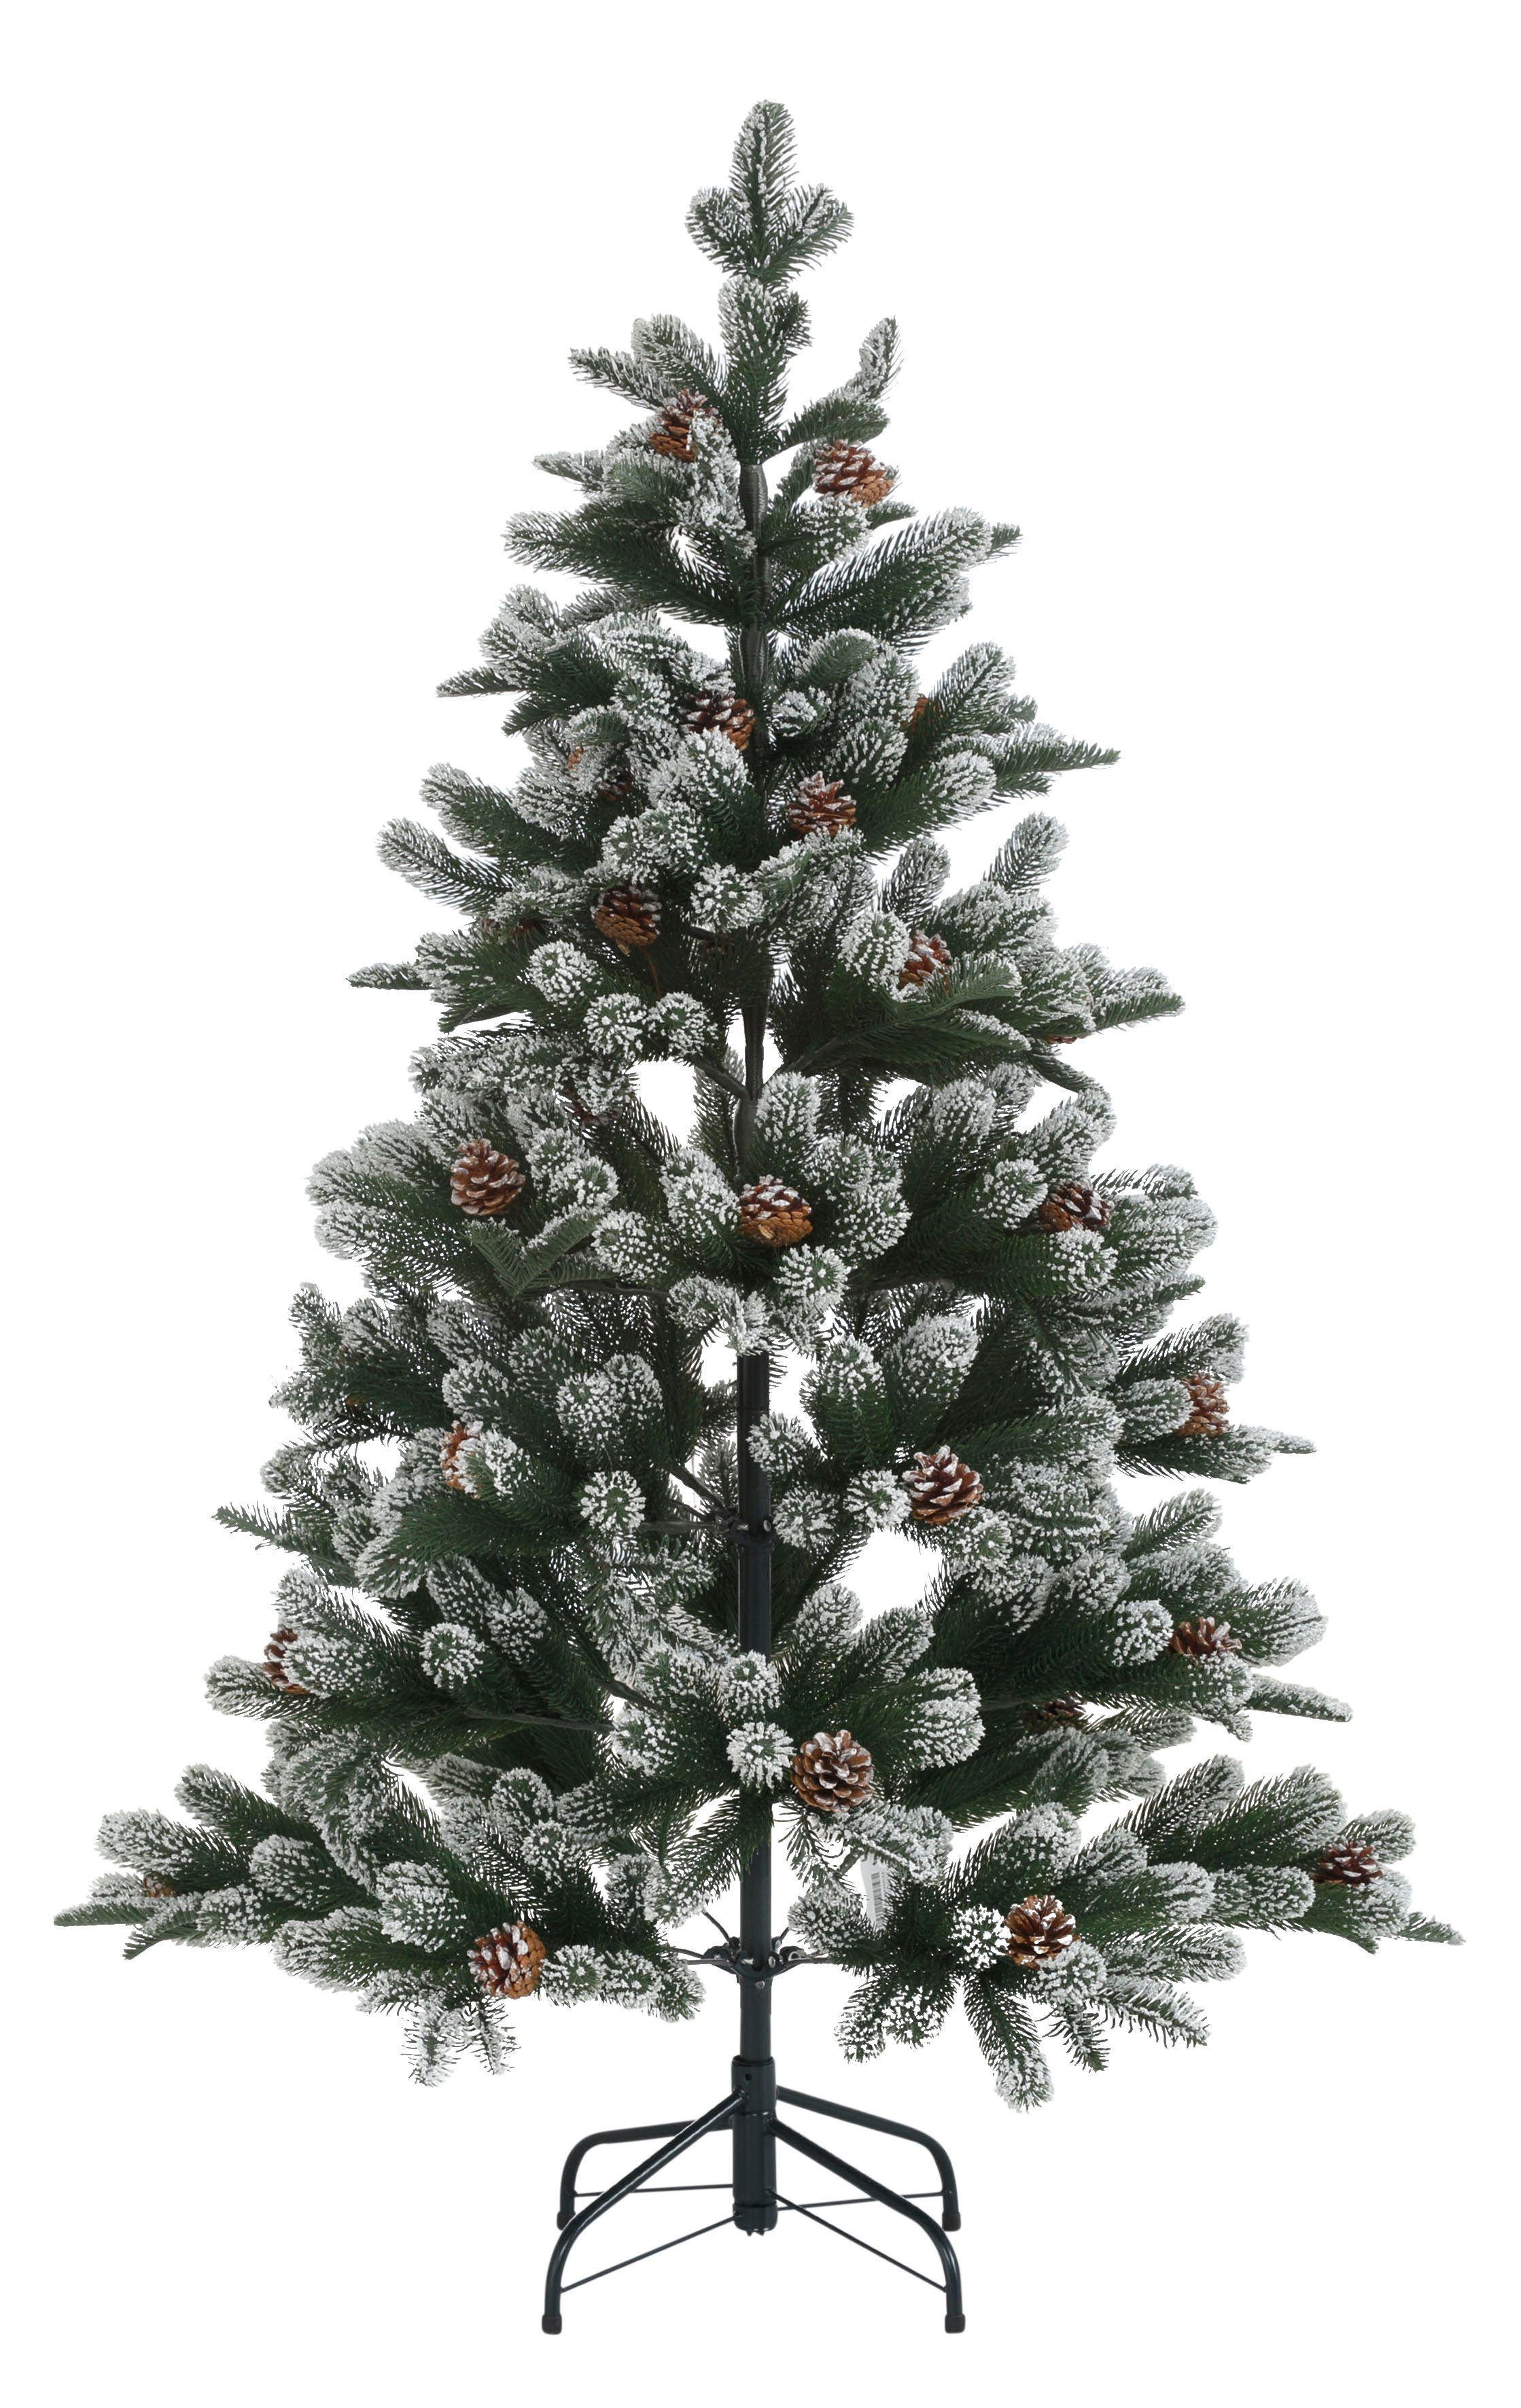 myflair moebel  accessoires kunstkerstboom kerstversiering, snow on green, kunstkerstboom, dennenboom groen